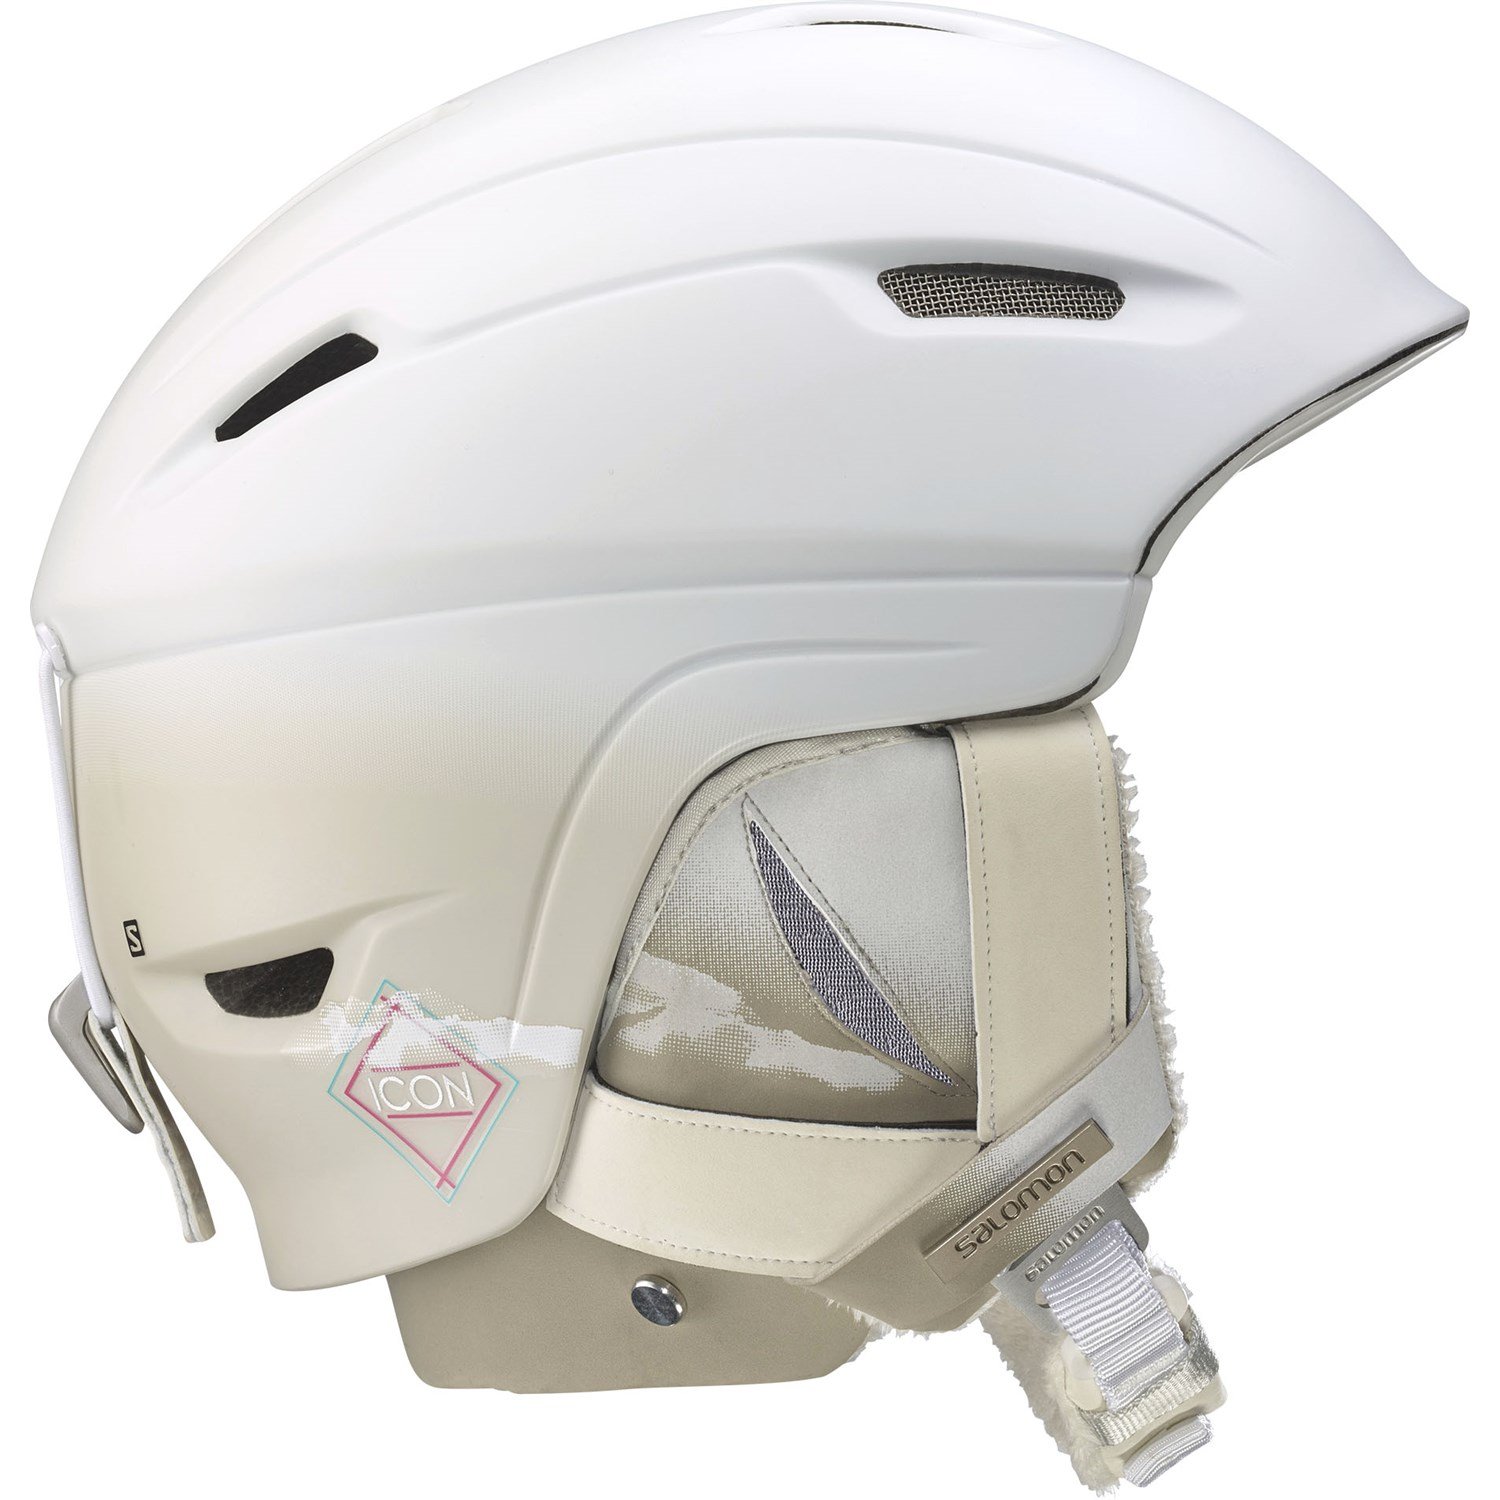 Salomon Icon Custom Air Helmet - Women's | evo